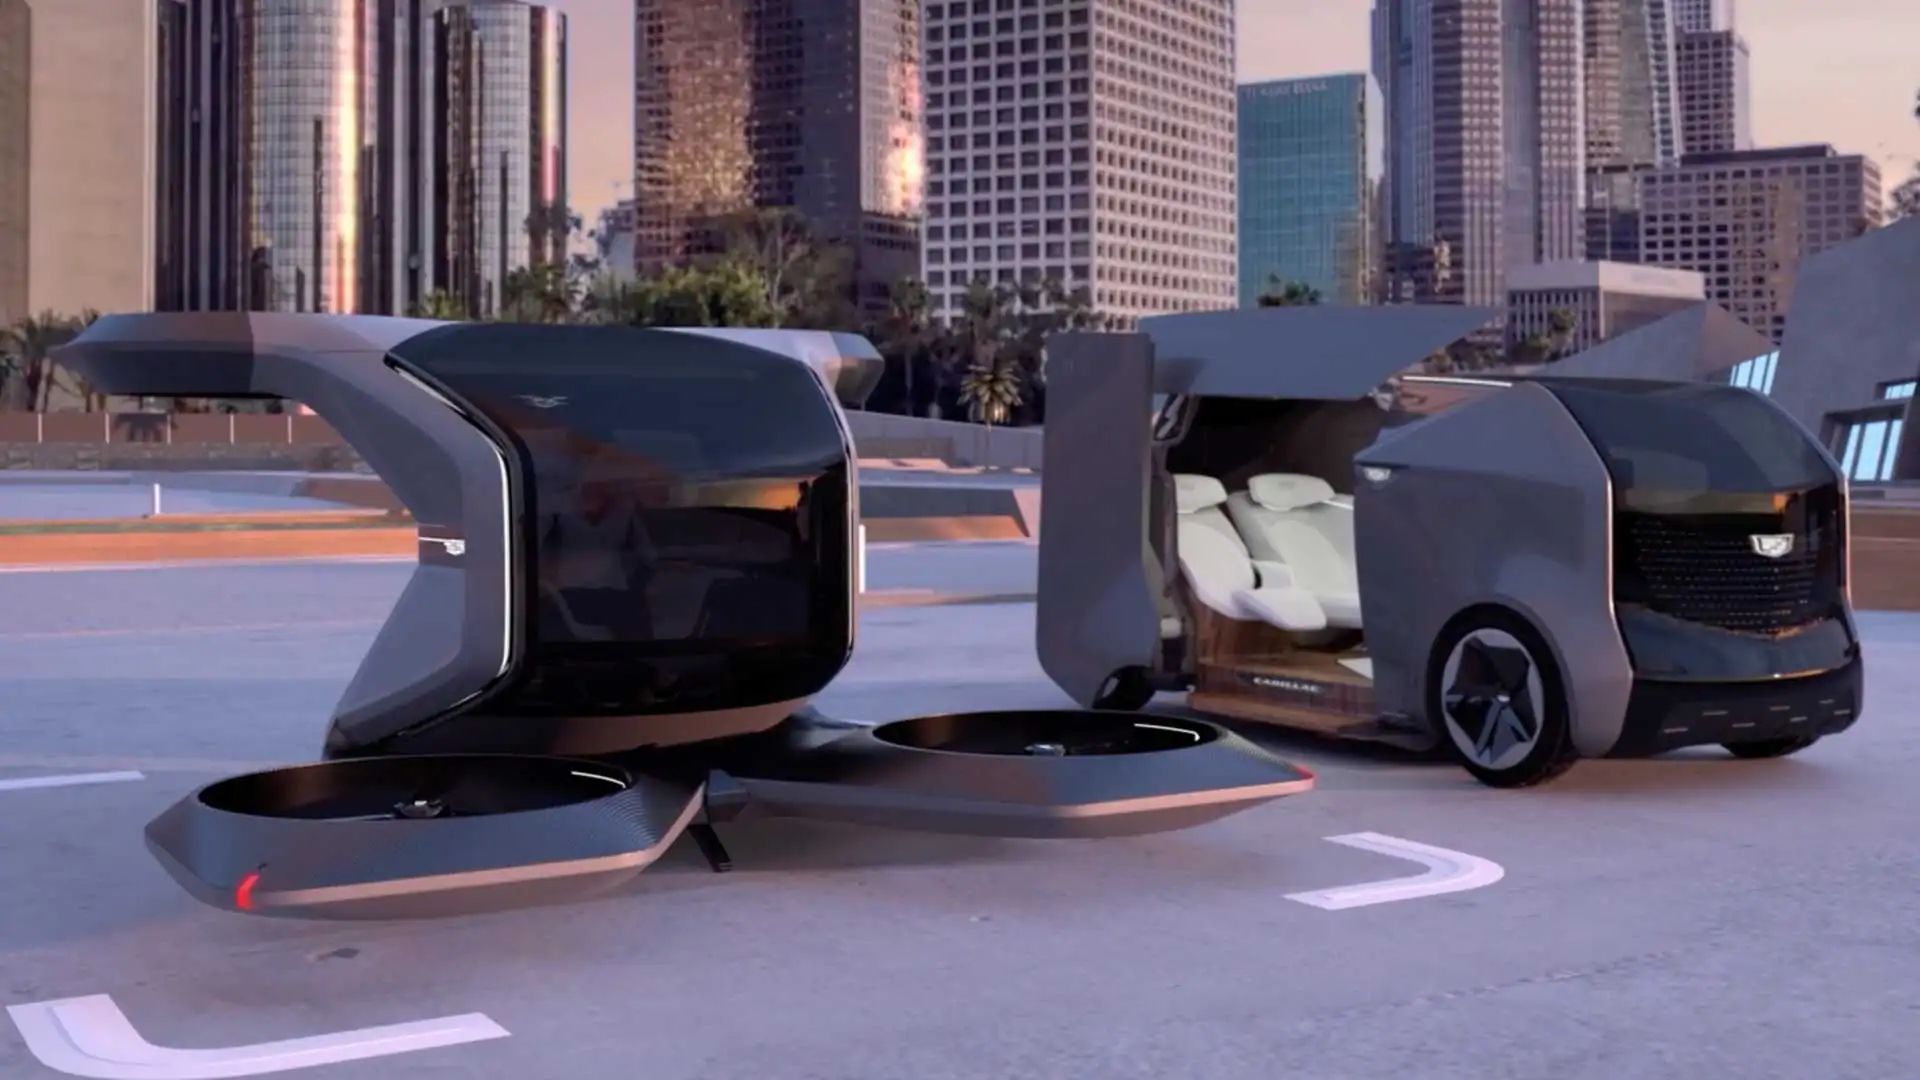 InnerSpace Concept 2 - Cadillac releases autonomous electric vehicles concept